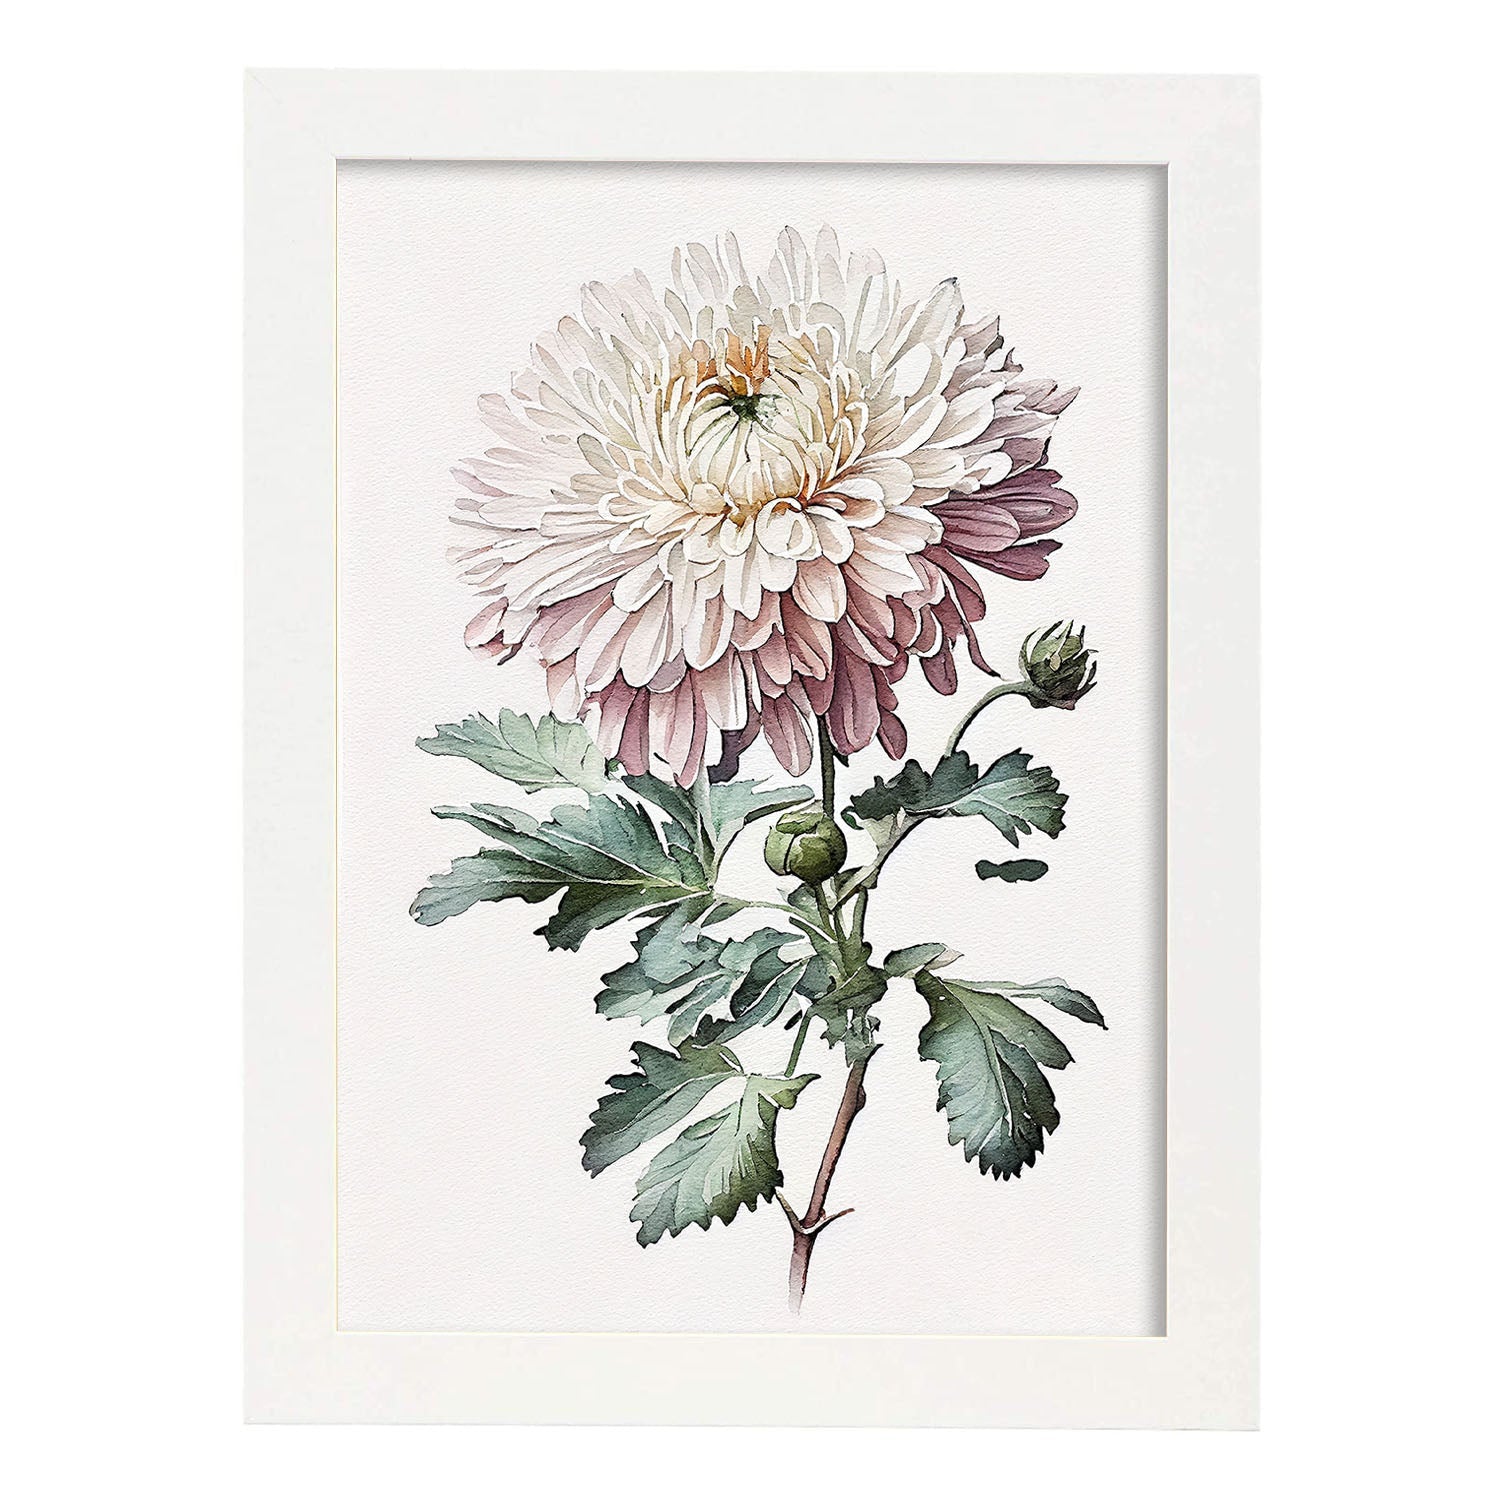 Nacnic watercolor minmal Chrysanthemum_2. Aesthetic Wall Art Prints for Bedroom or Living Room Design.-Artwork-Nacnic-A4-Marco Blanco-Nacnic Estudio SL